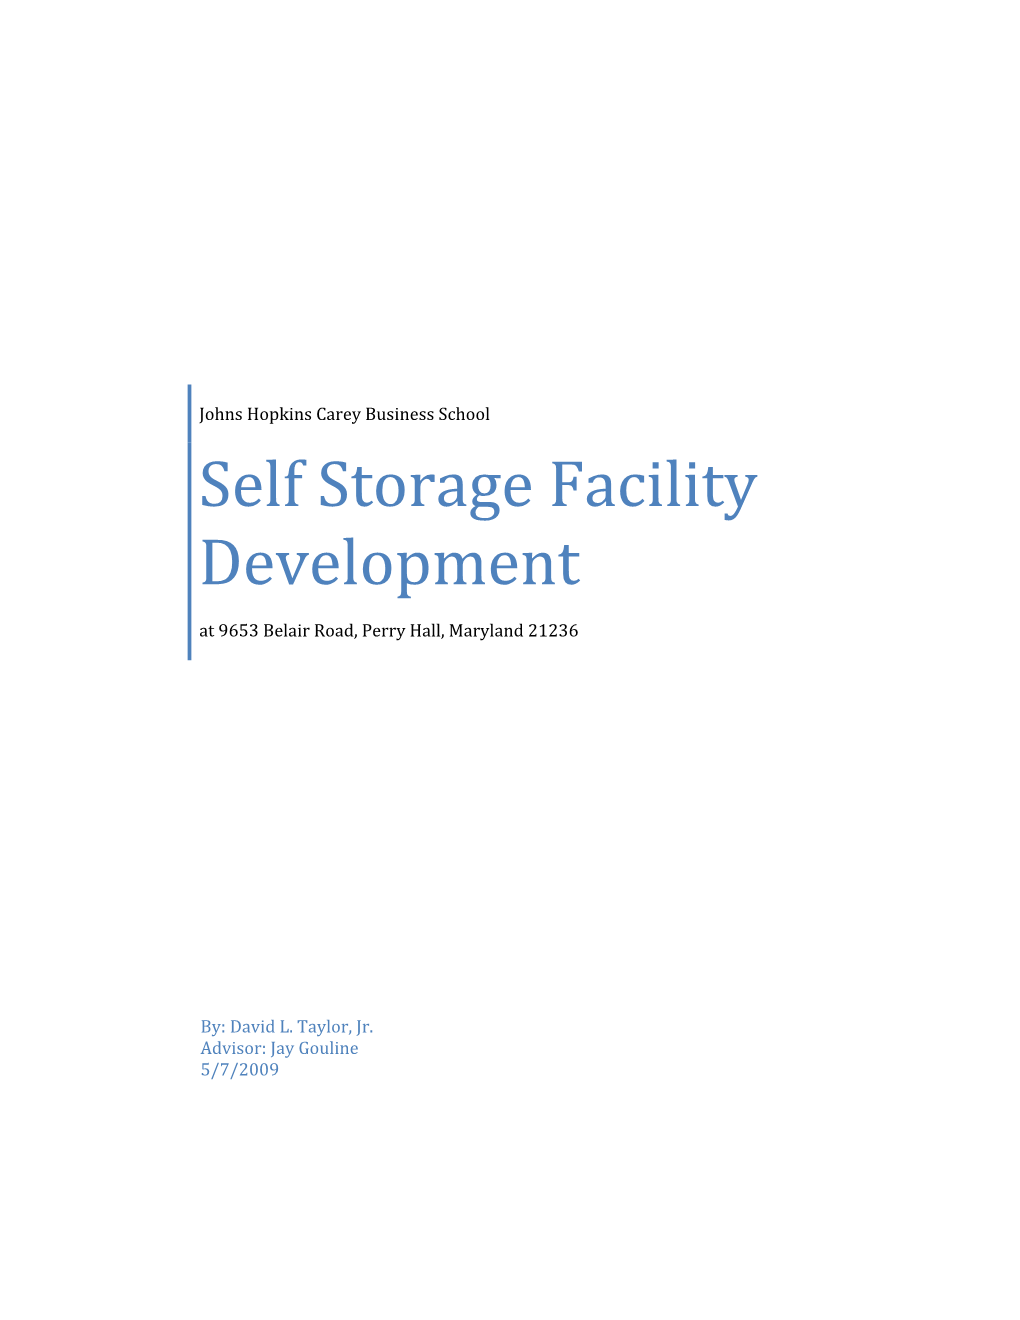 Self Storage Facility Development